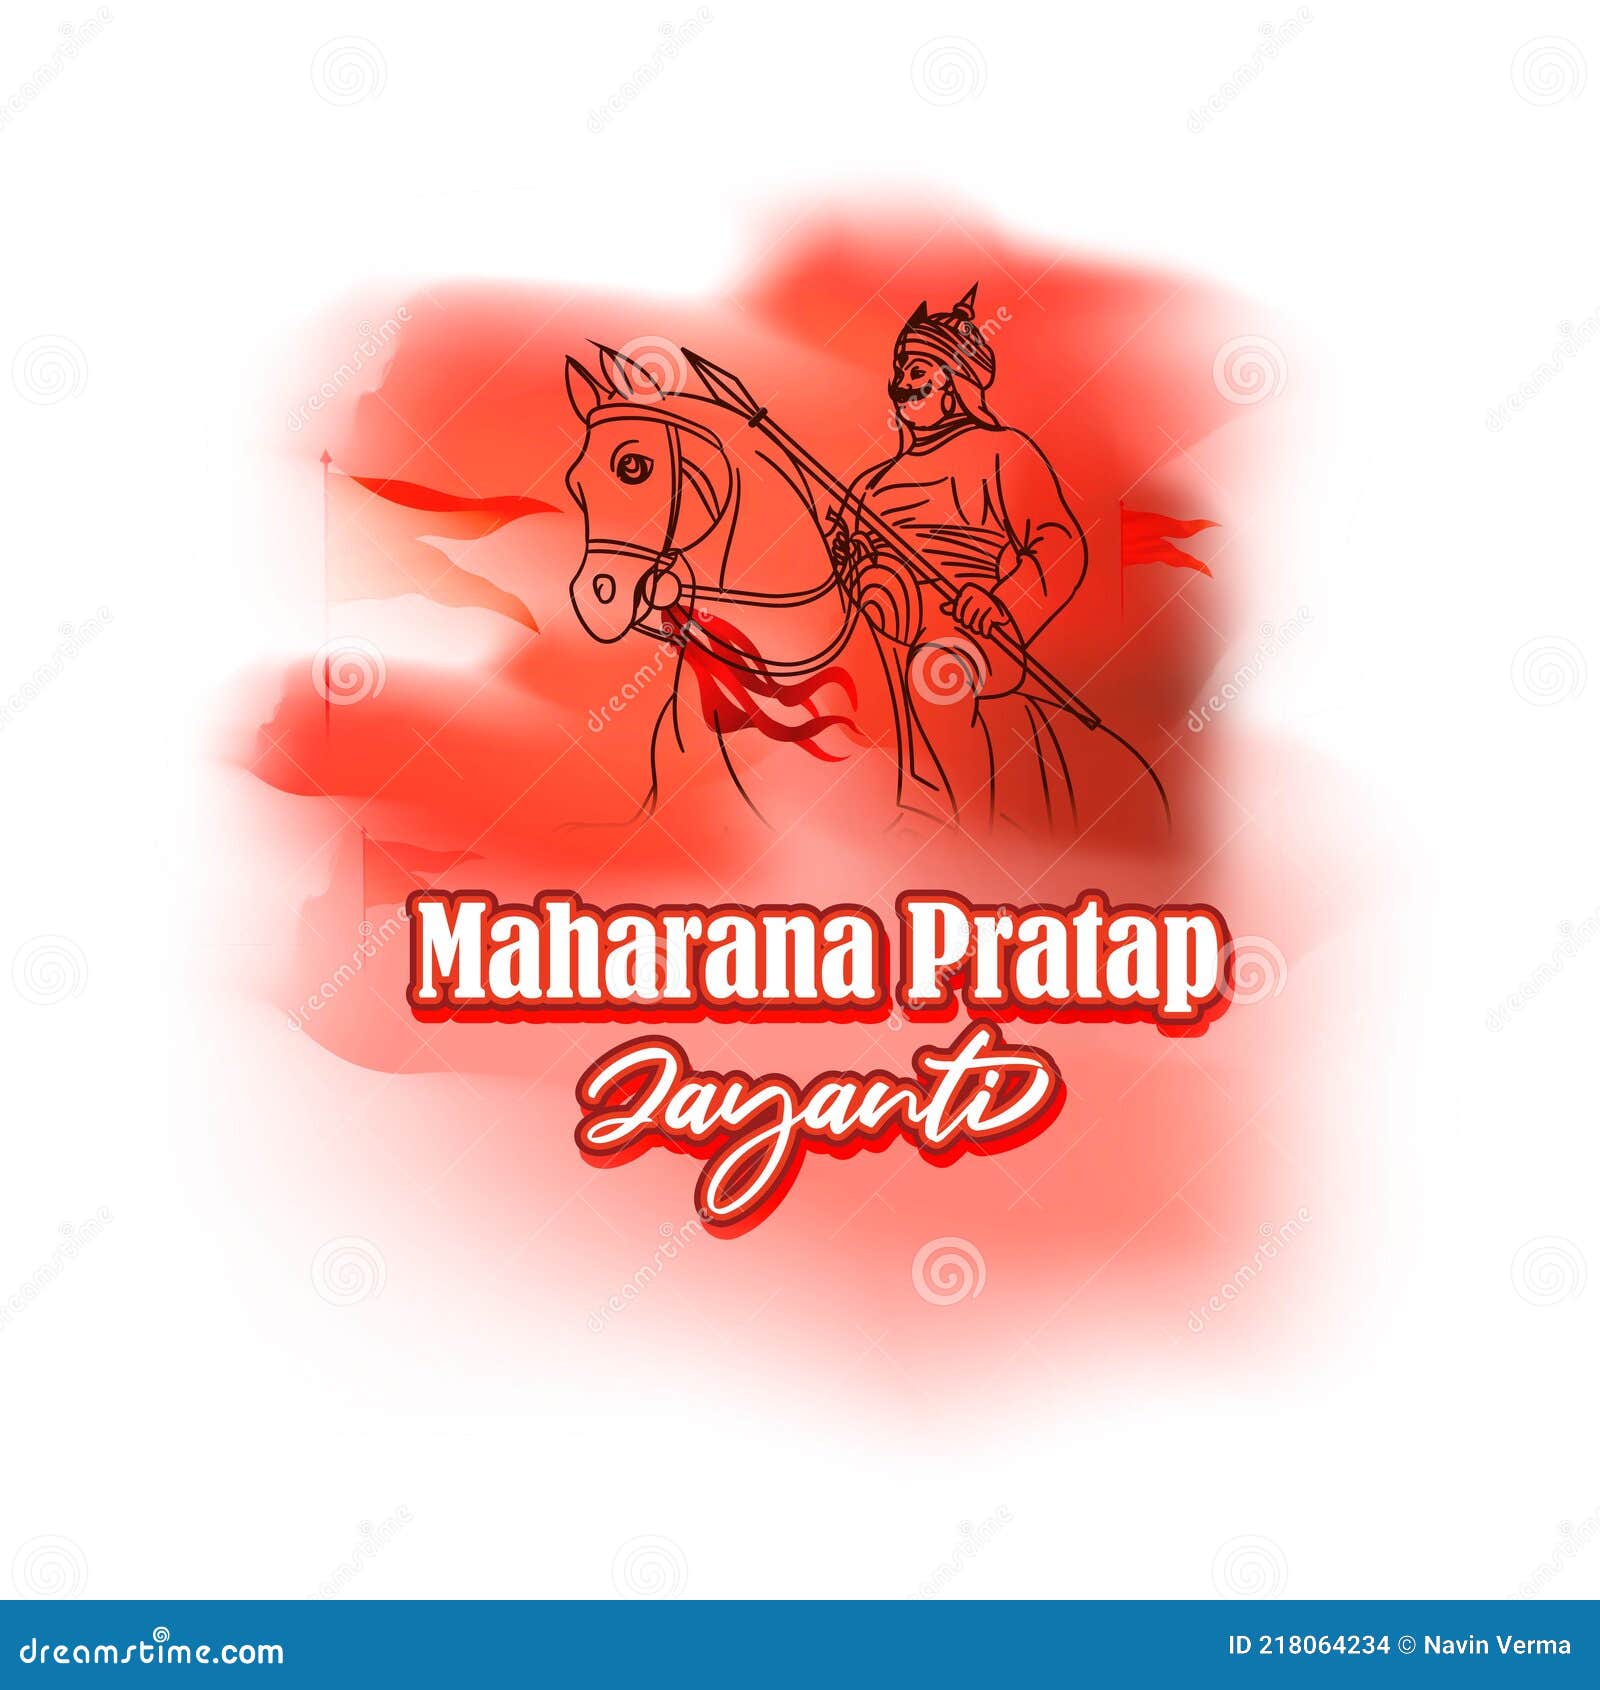 Download Maharana Pratap And Two Companies 4k Wallpaper | Wallpapers.com